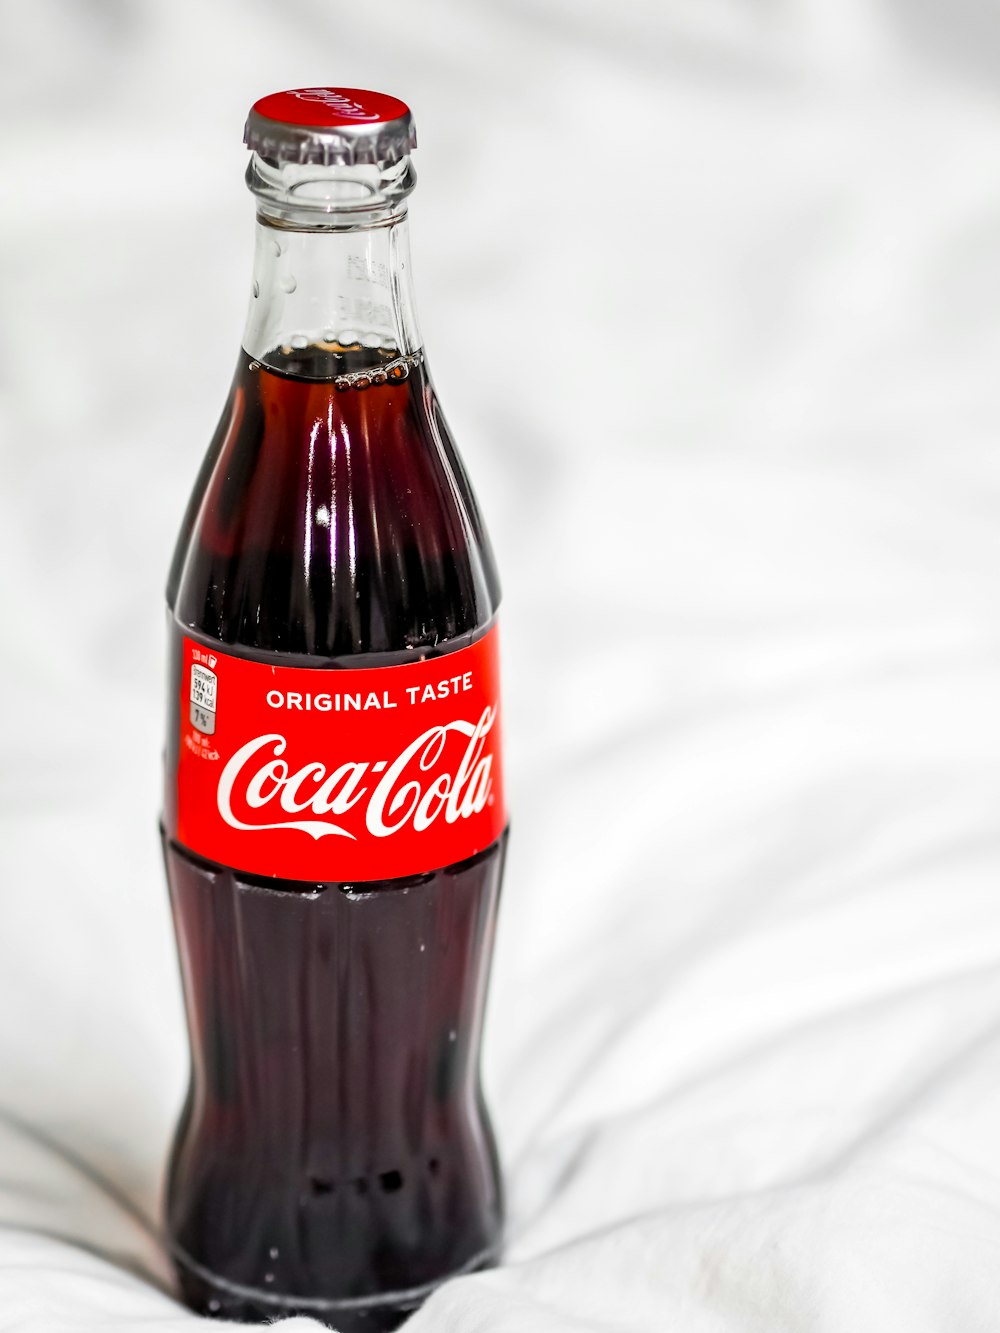 coca cola glass bottle on white textile